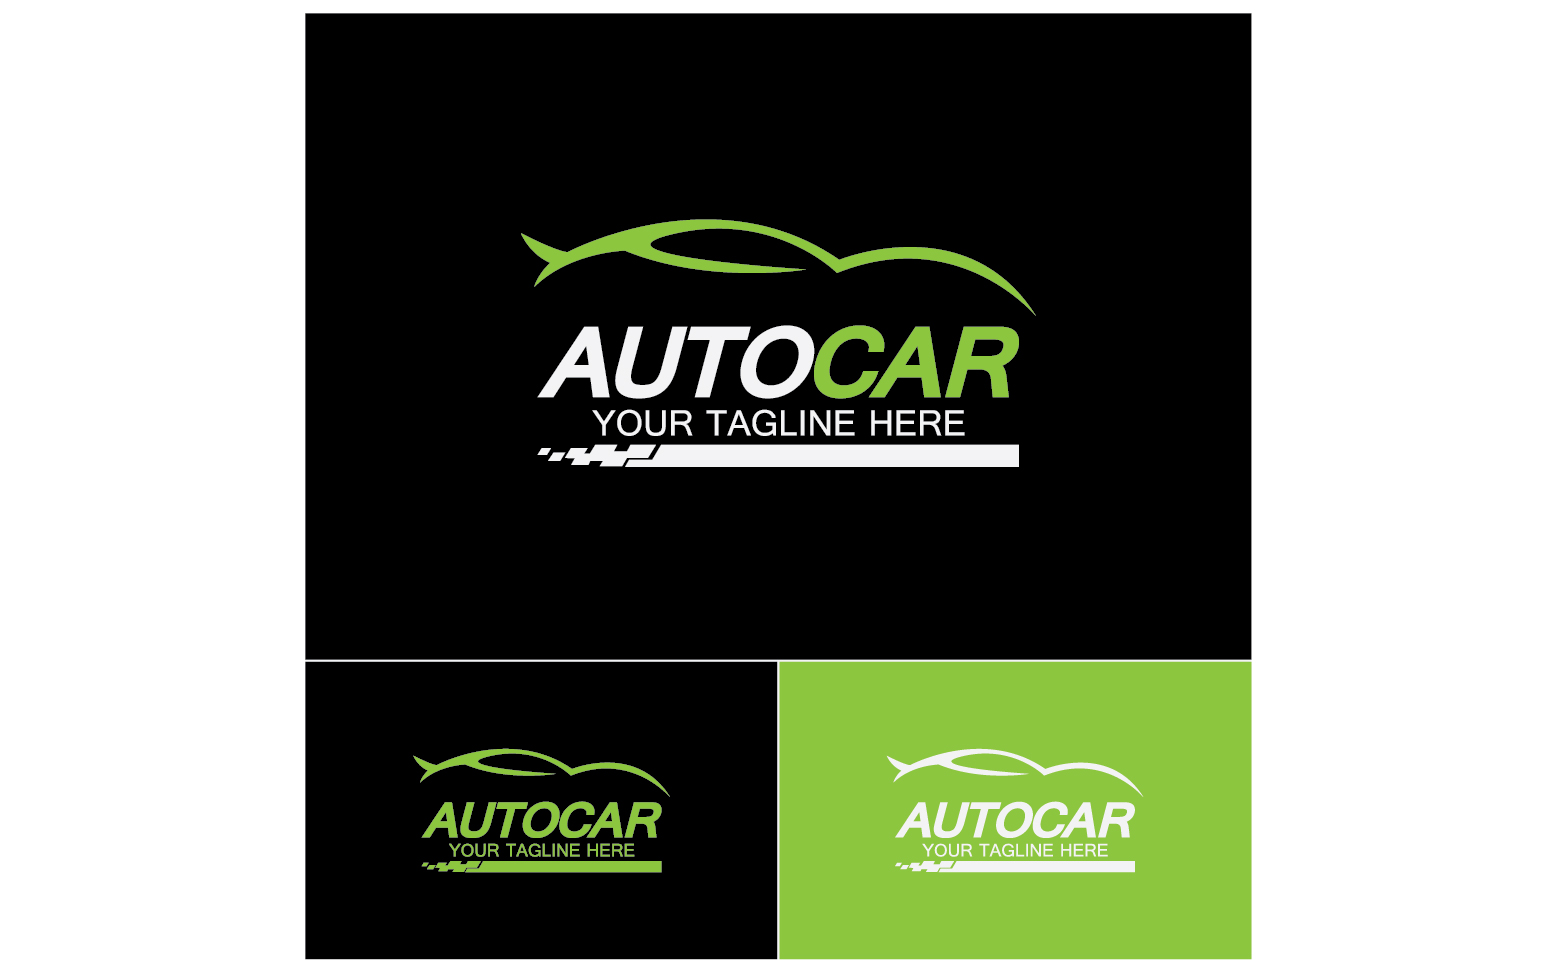 Cars dealer, automotive, autocar logo design inspiration. v58